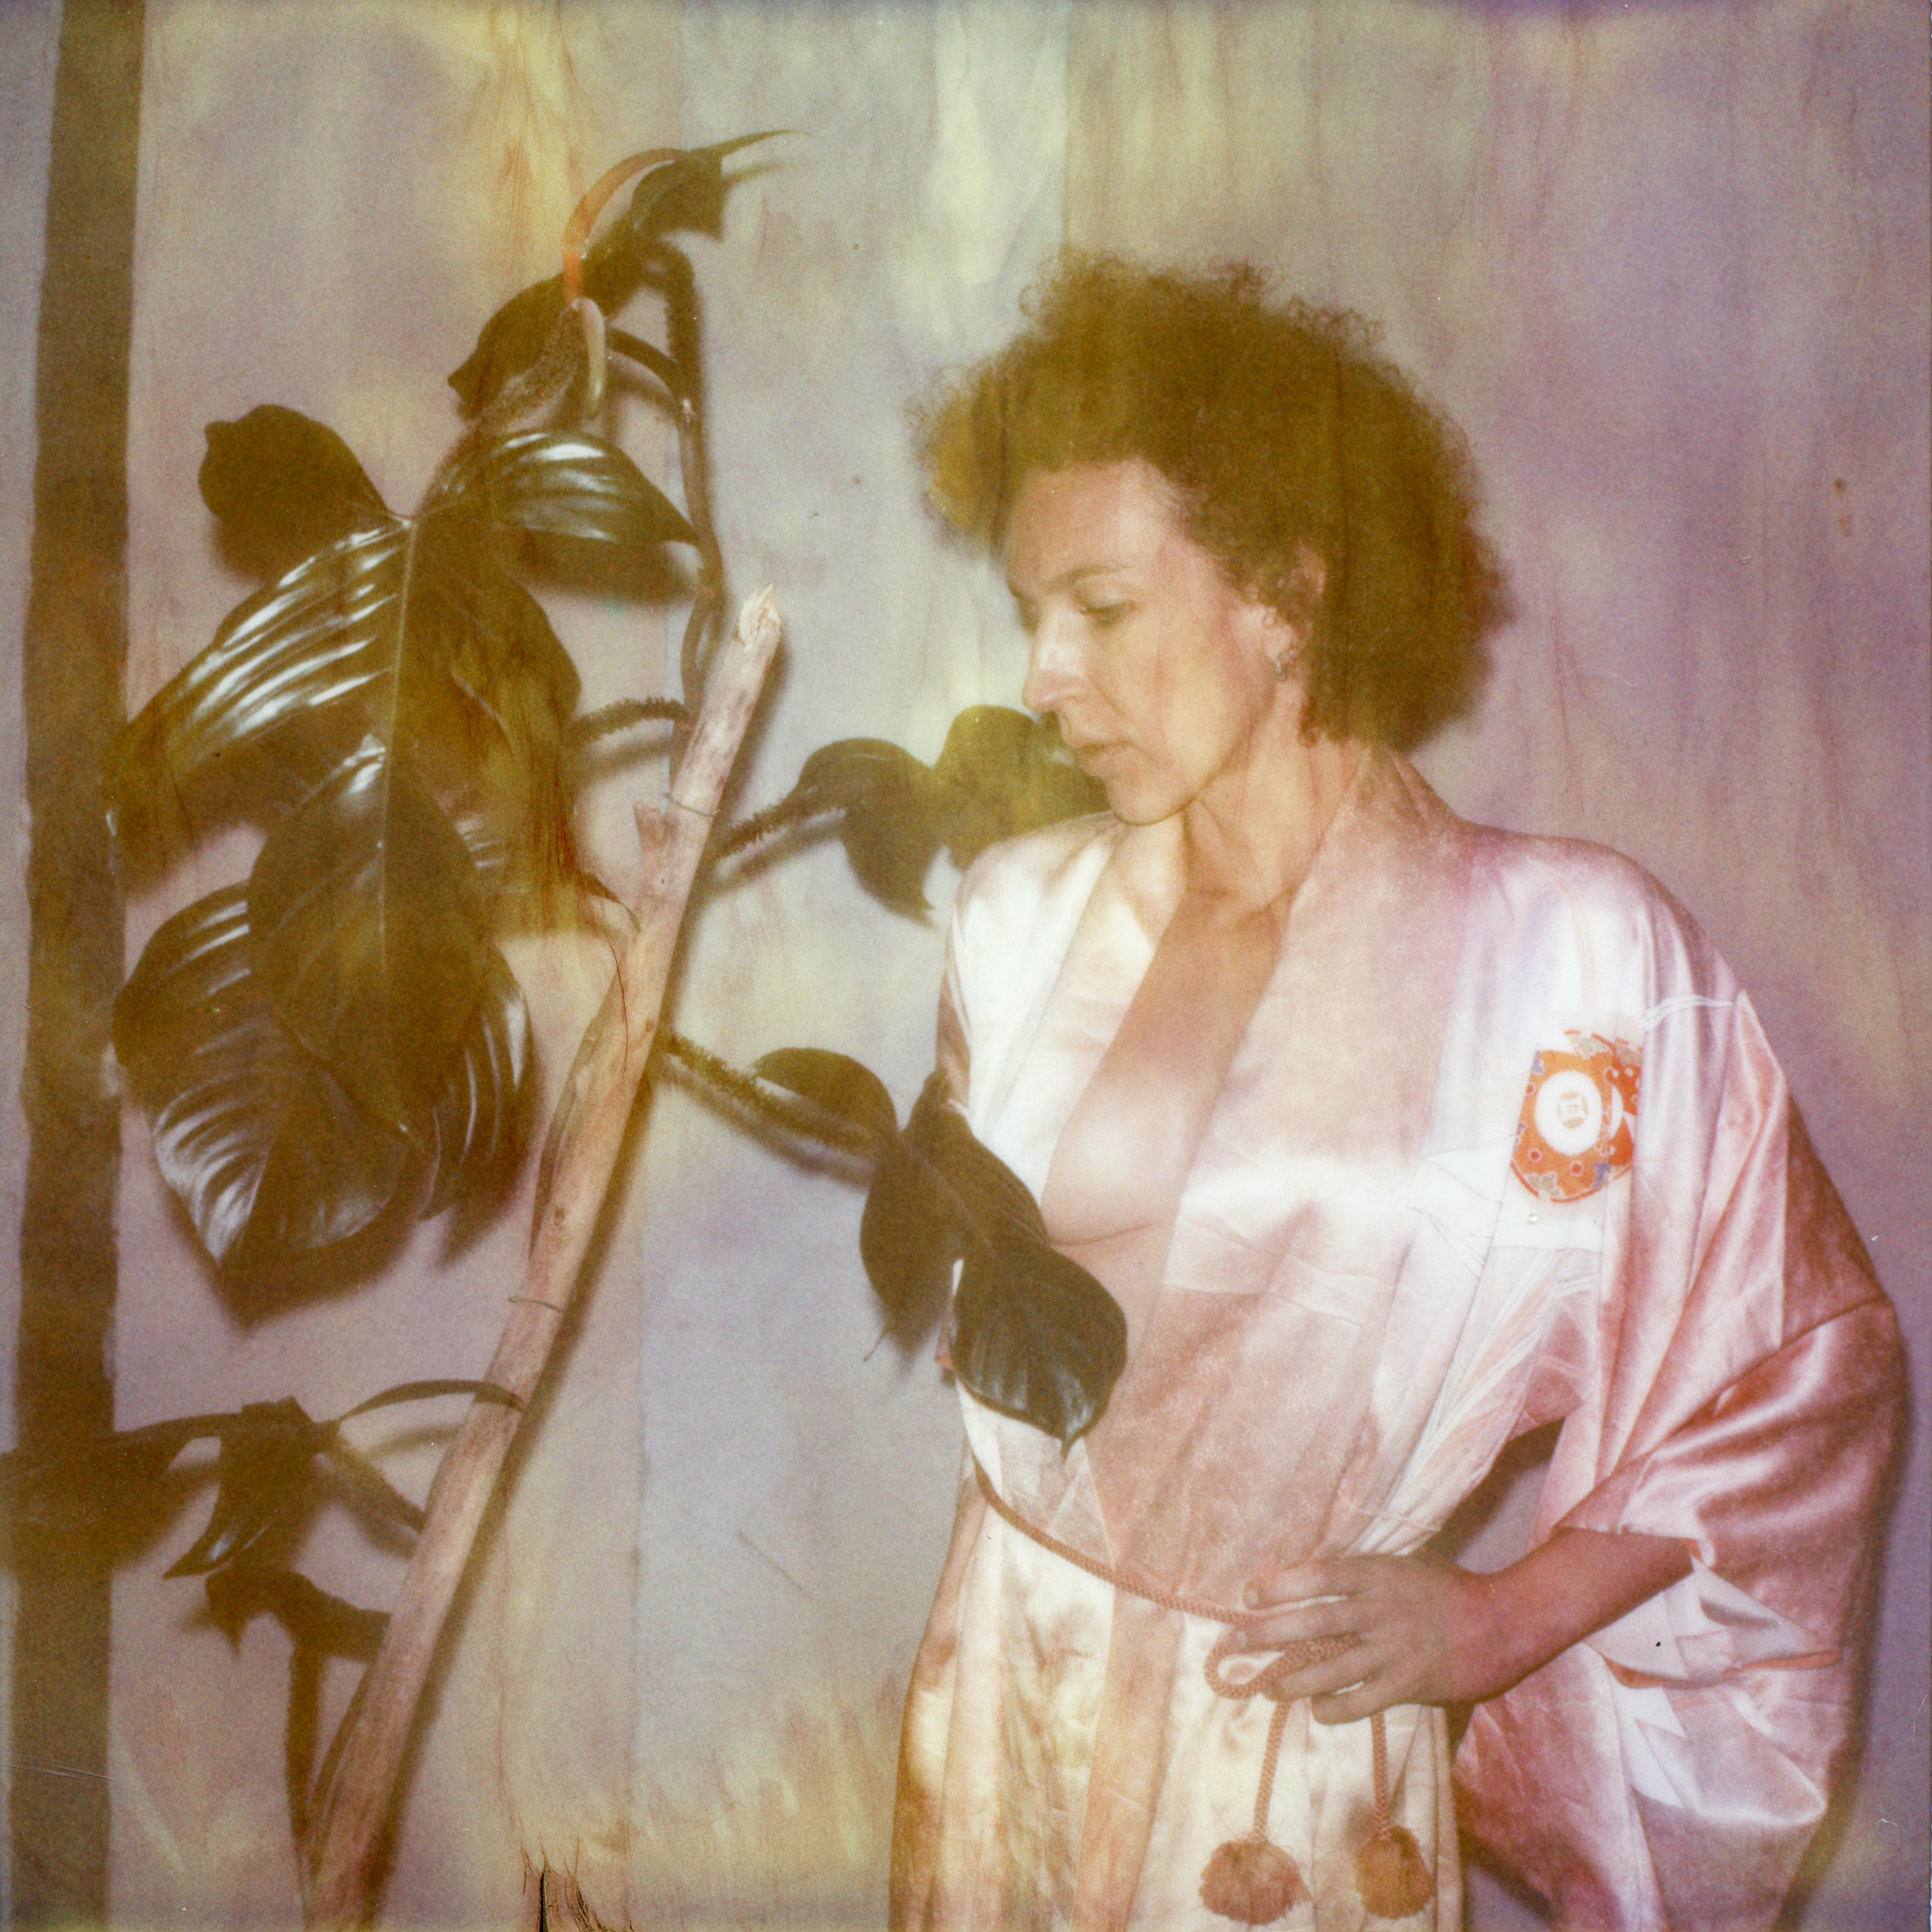 Kirsten Thys van den Audenaerde Portrait Photograph - Golden years - Contemporary, Polaroid, Color, Women, 21st Century